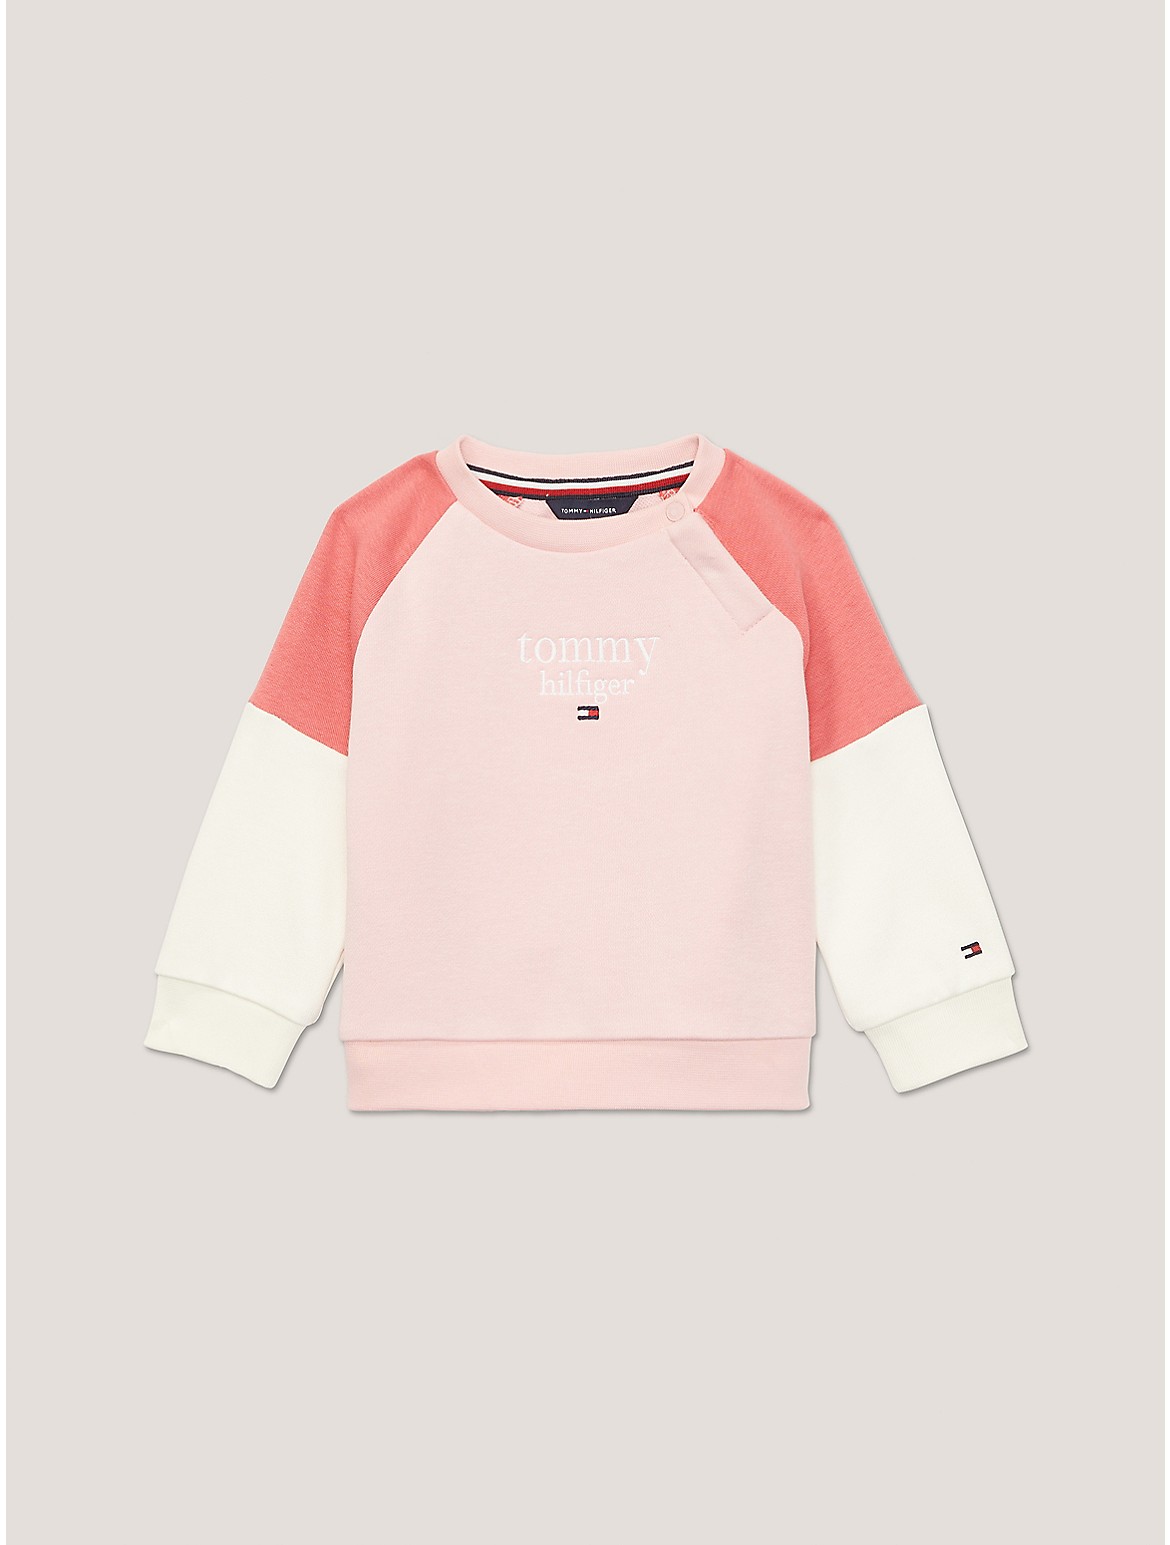 Tommy Hilfiger Girls' Babies' Colorblock Crewneck - Pink - 24M